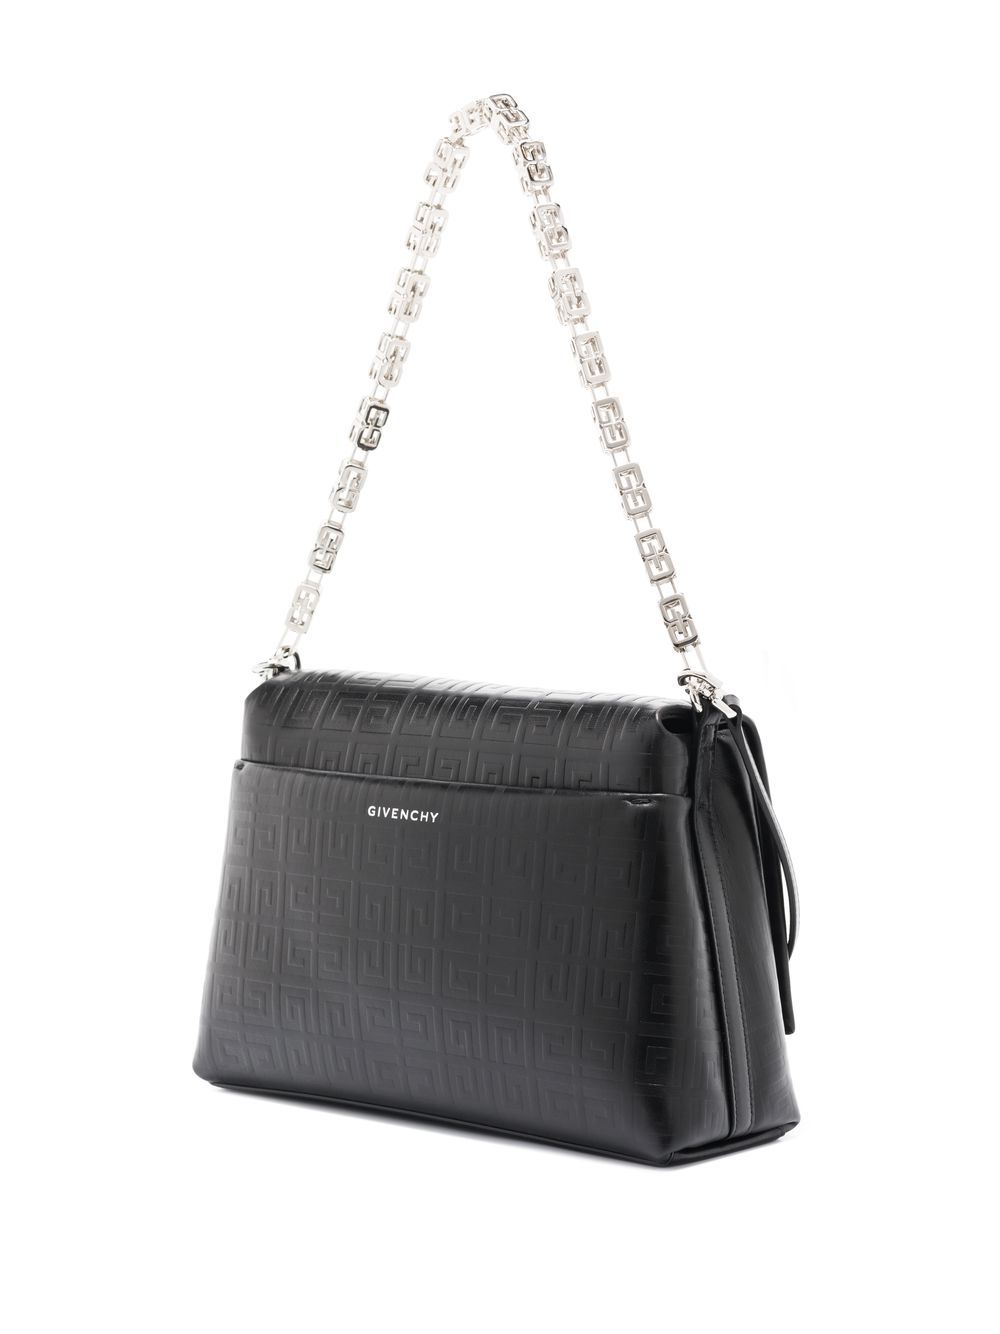 Givenchy Pandora Bag - Farfetch